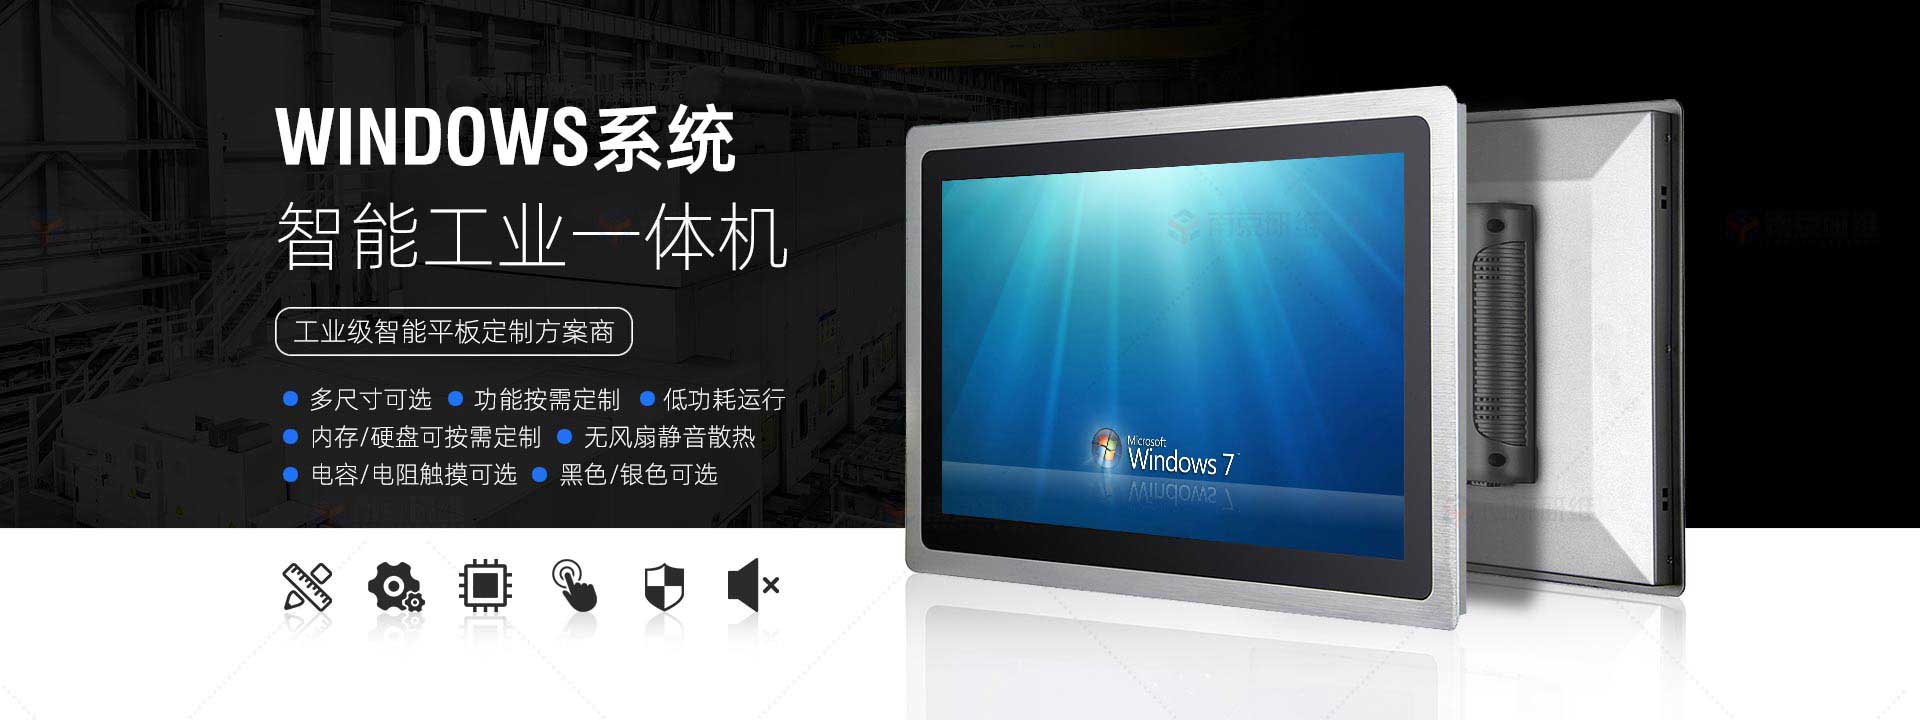 windows系統工業一體機平板電腦